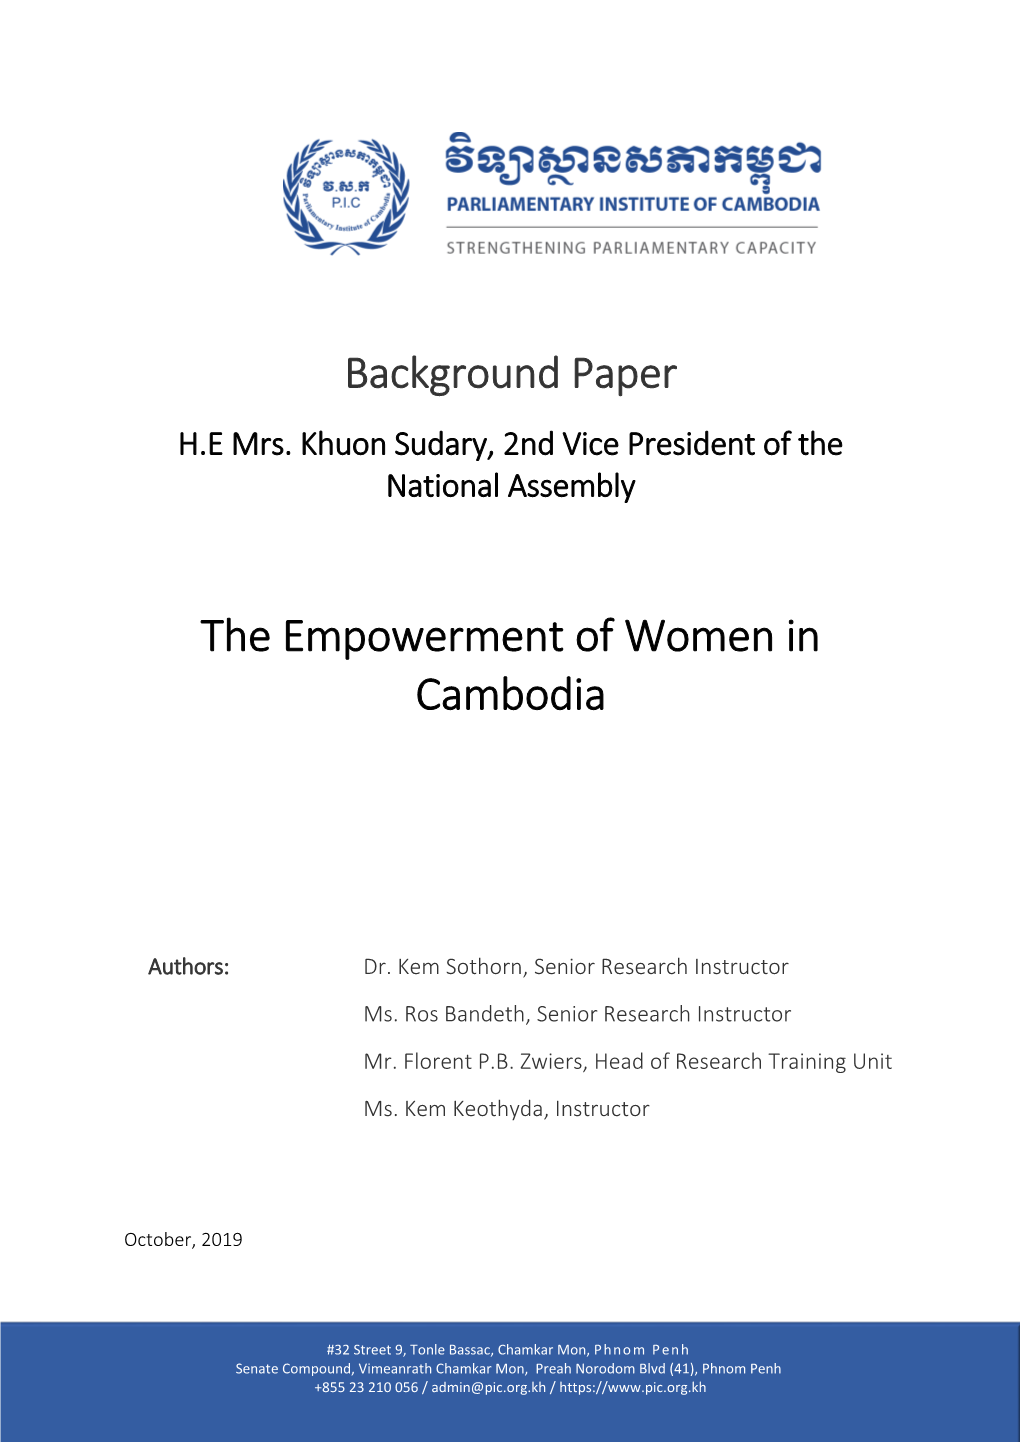 The Empowerment of Women in Cambodia